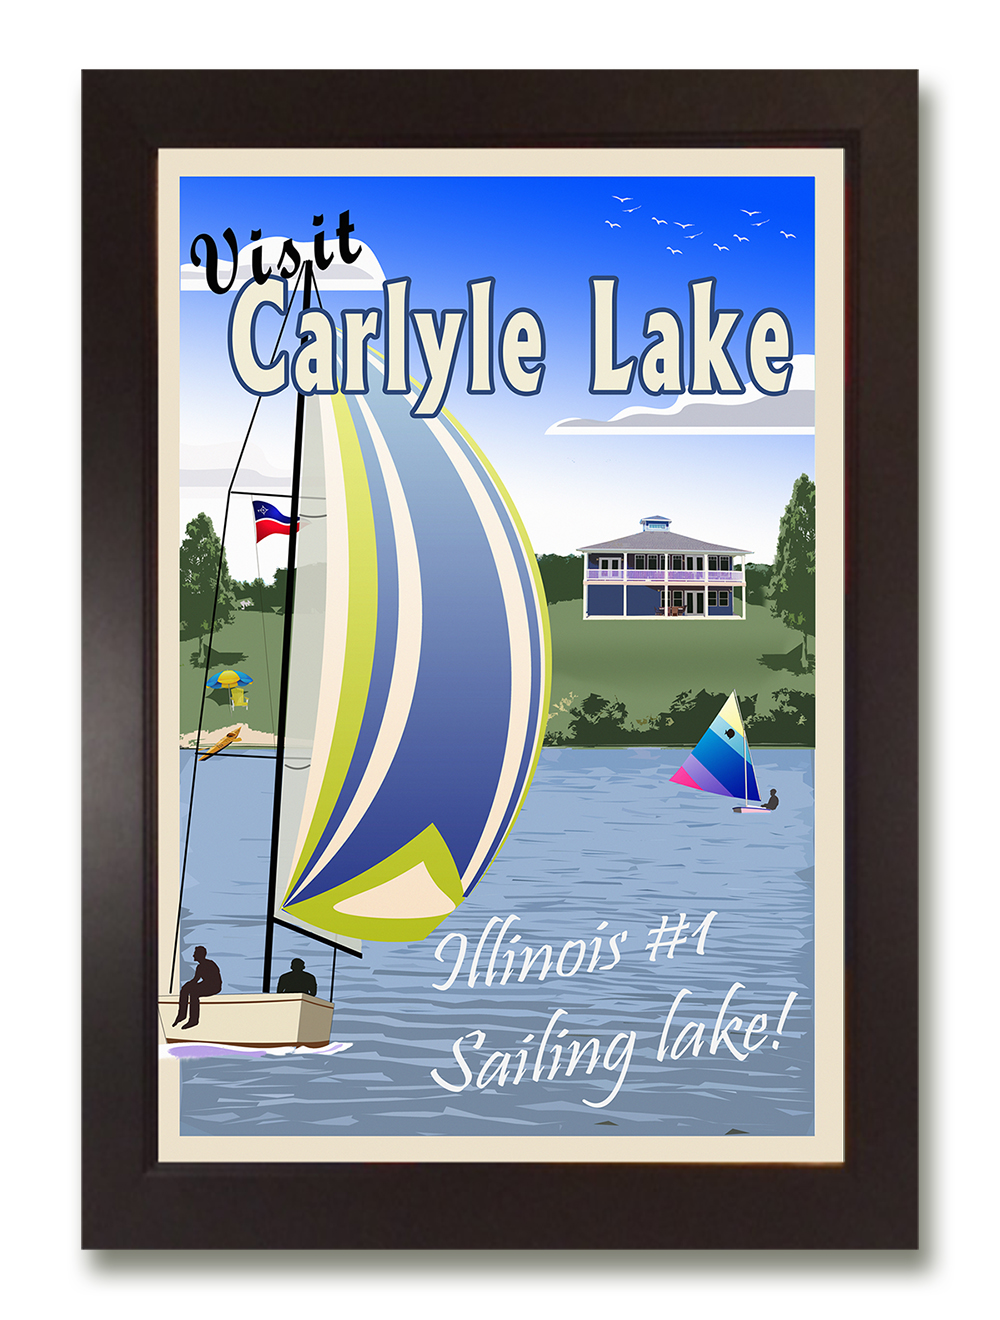 Carlyle Lake Travel Poster